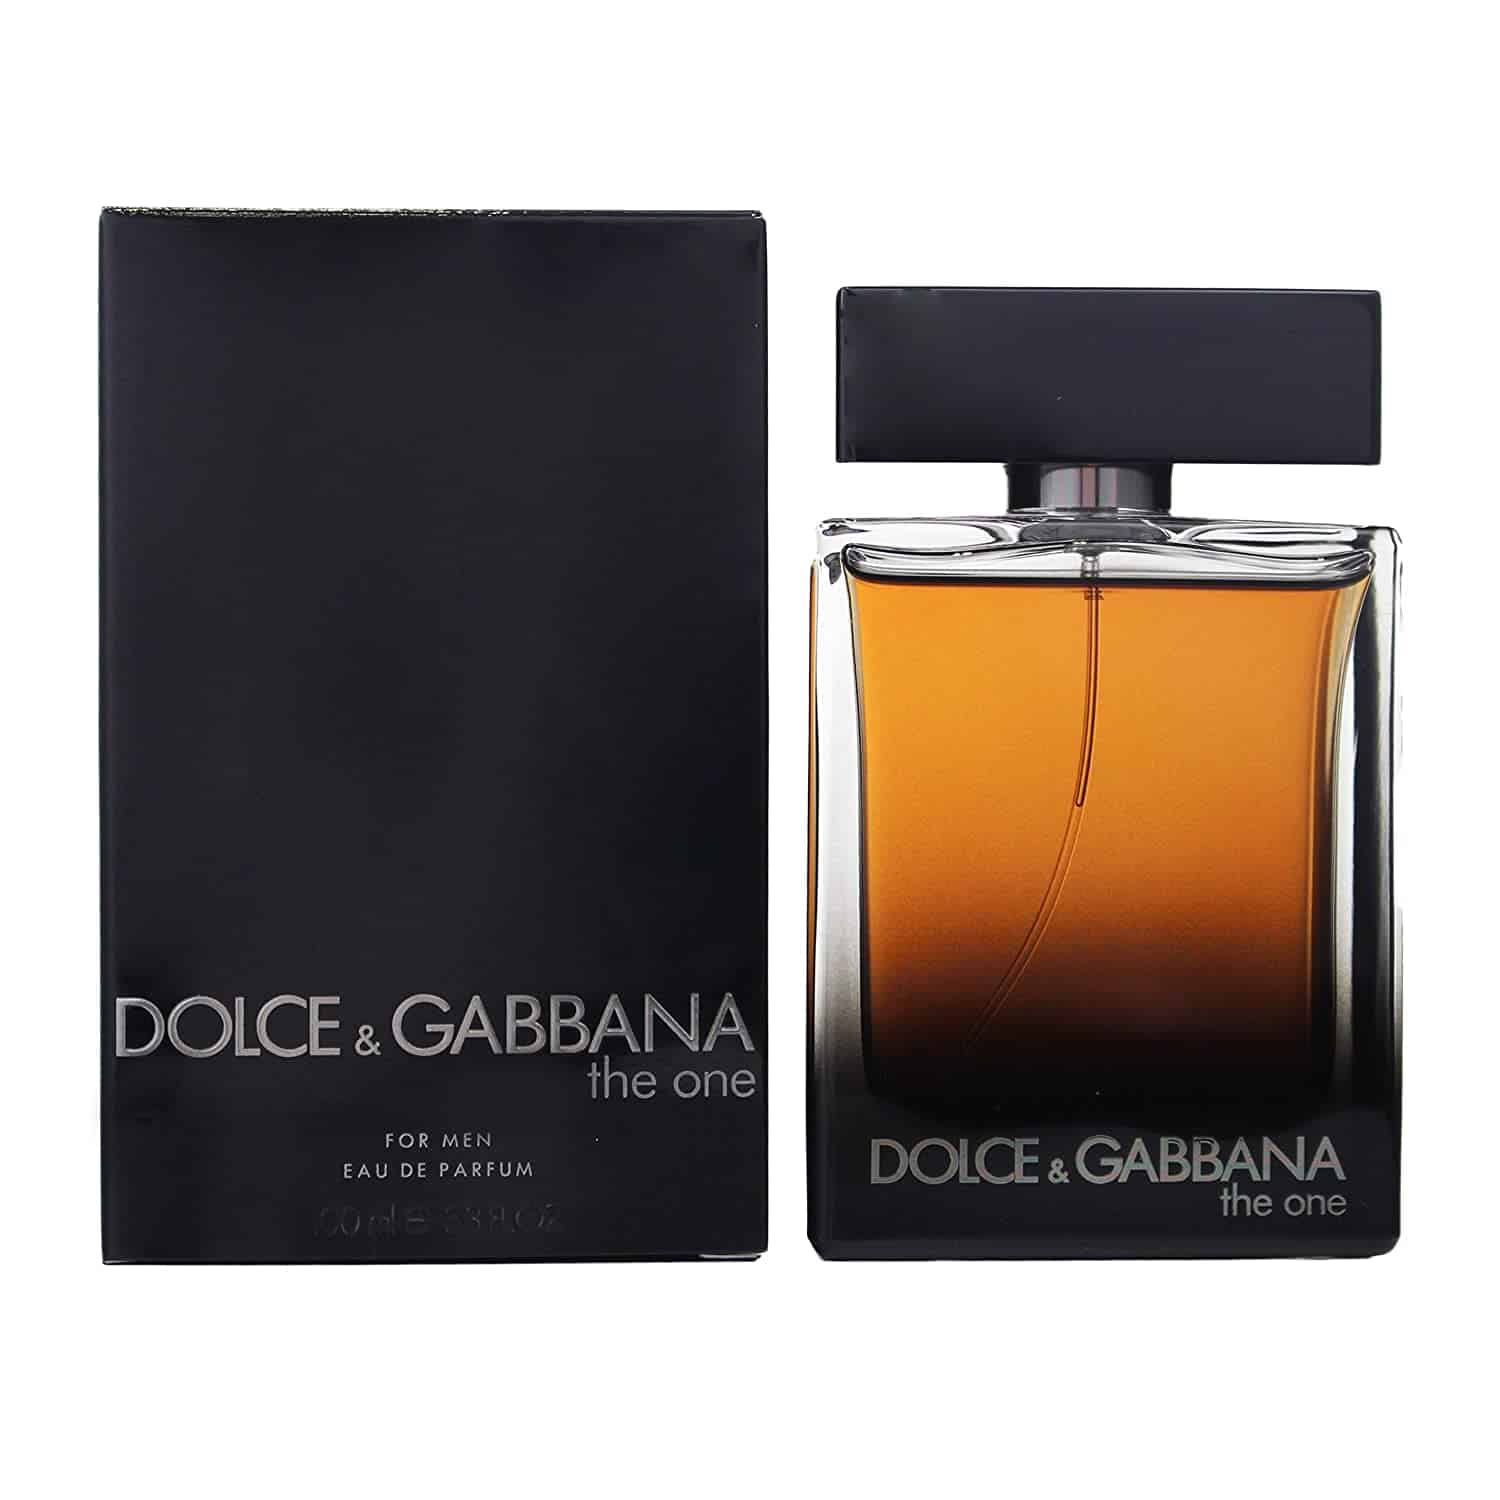 Buy Perfume Samples, Colognes, and Fragrances | Perfume Gift Sets